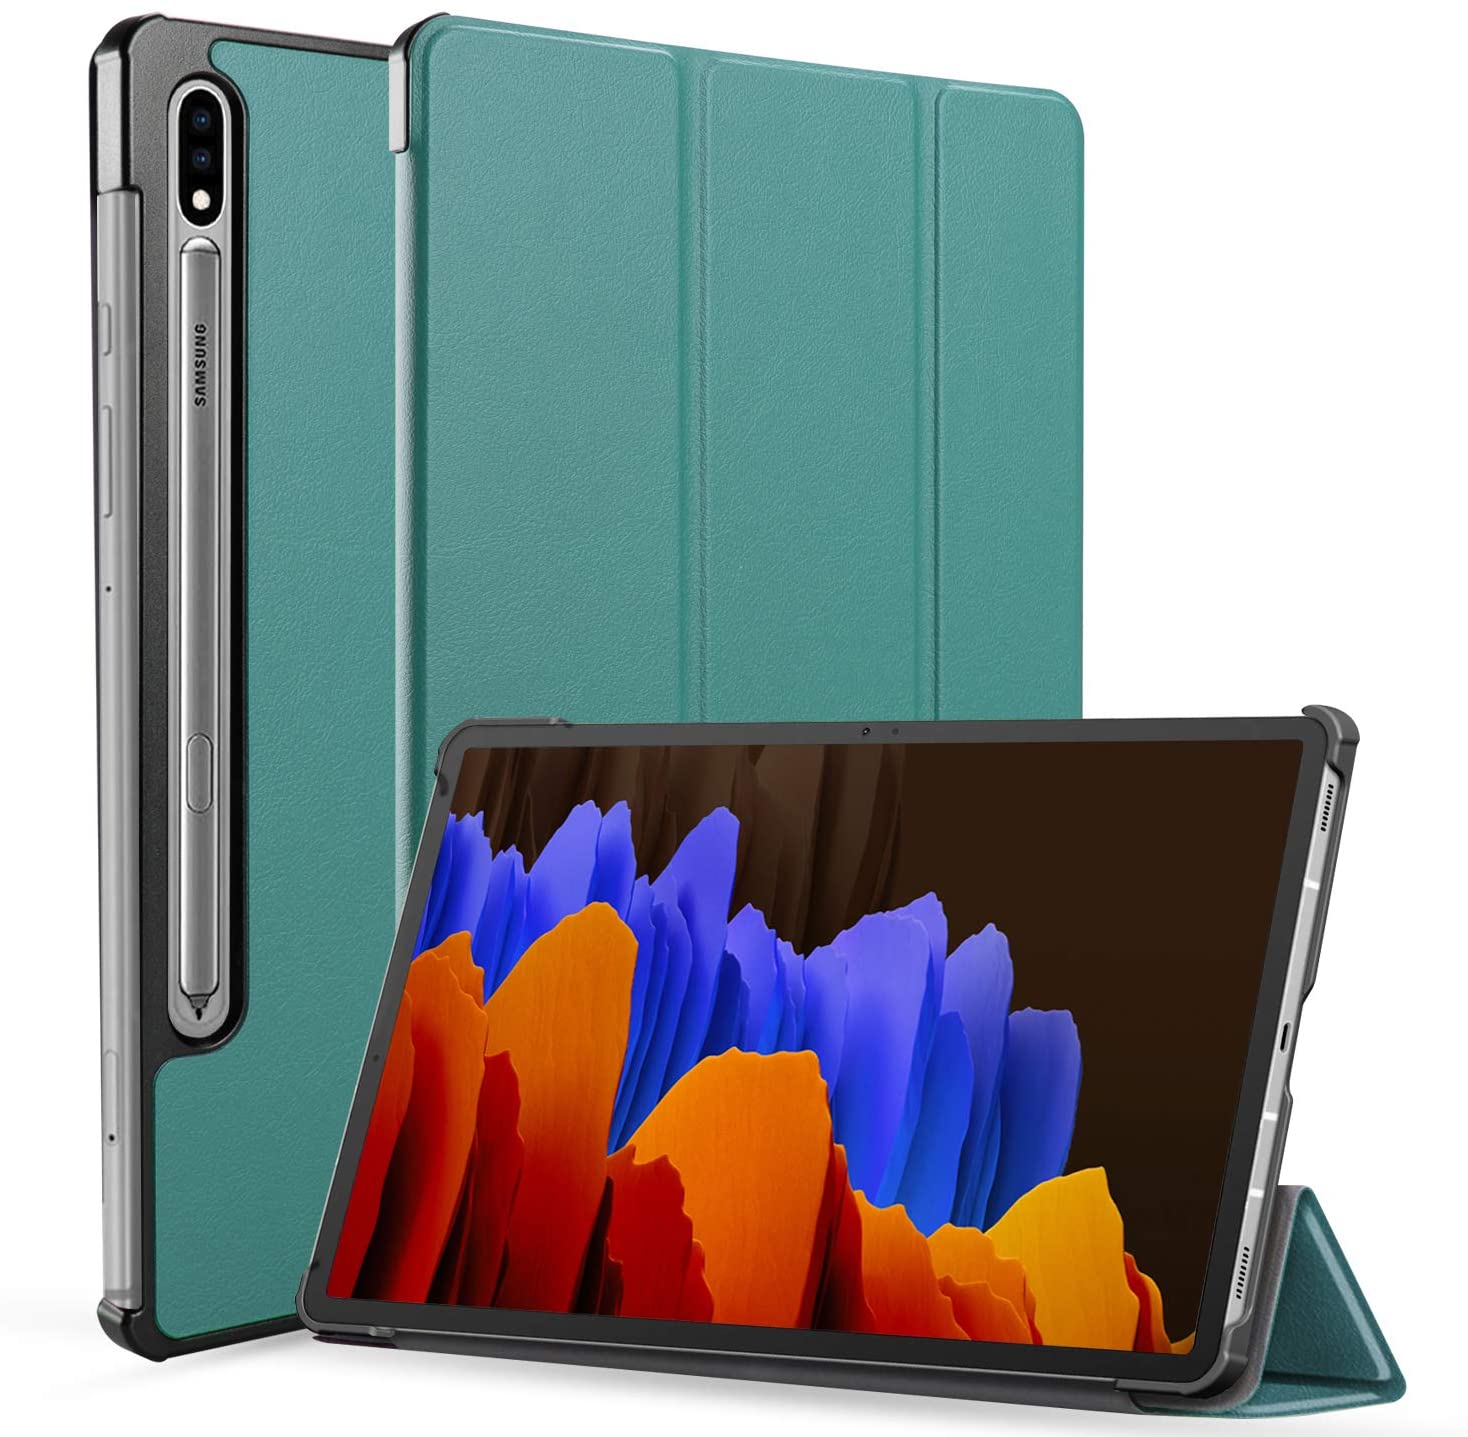 Neepanda Galaxy Tab S7plus Case